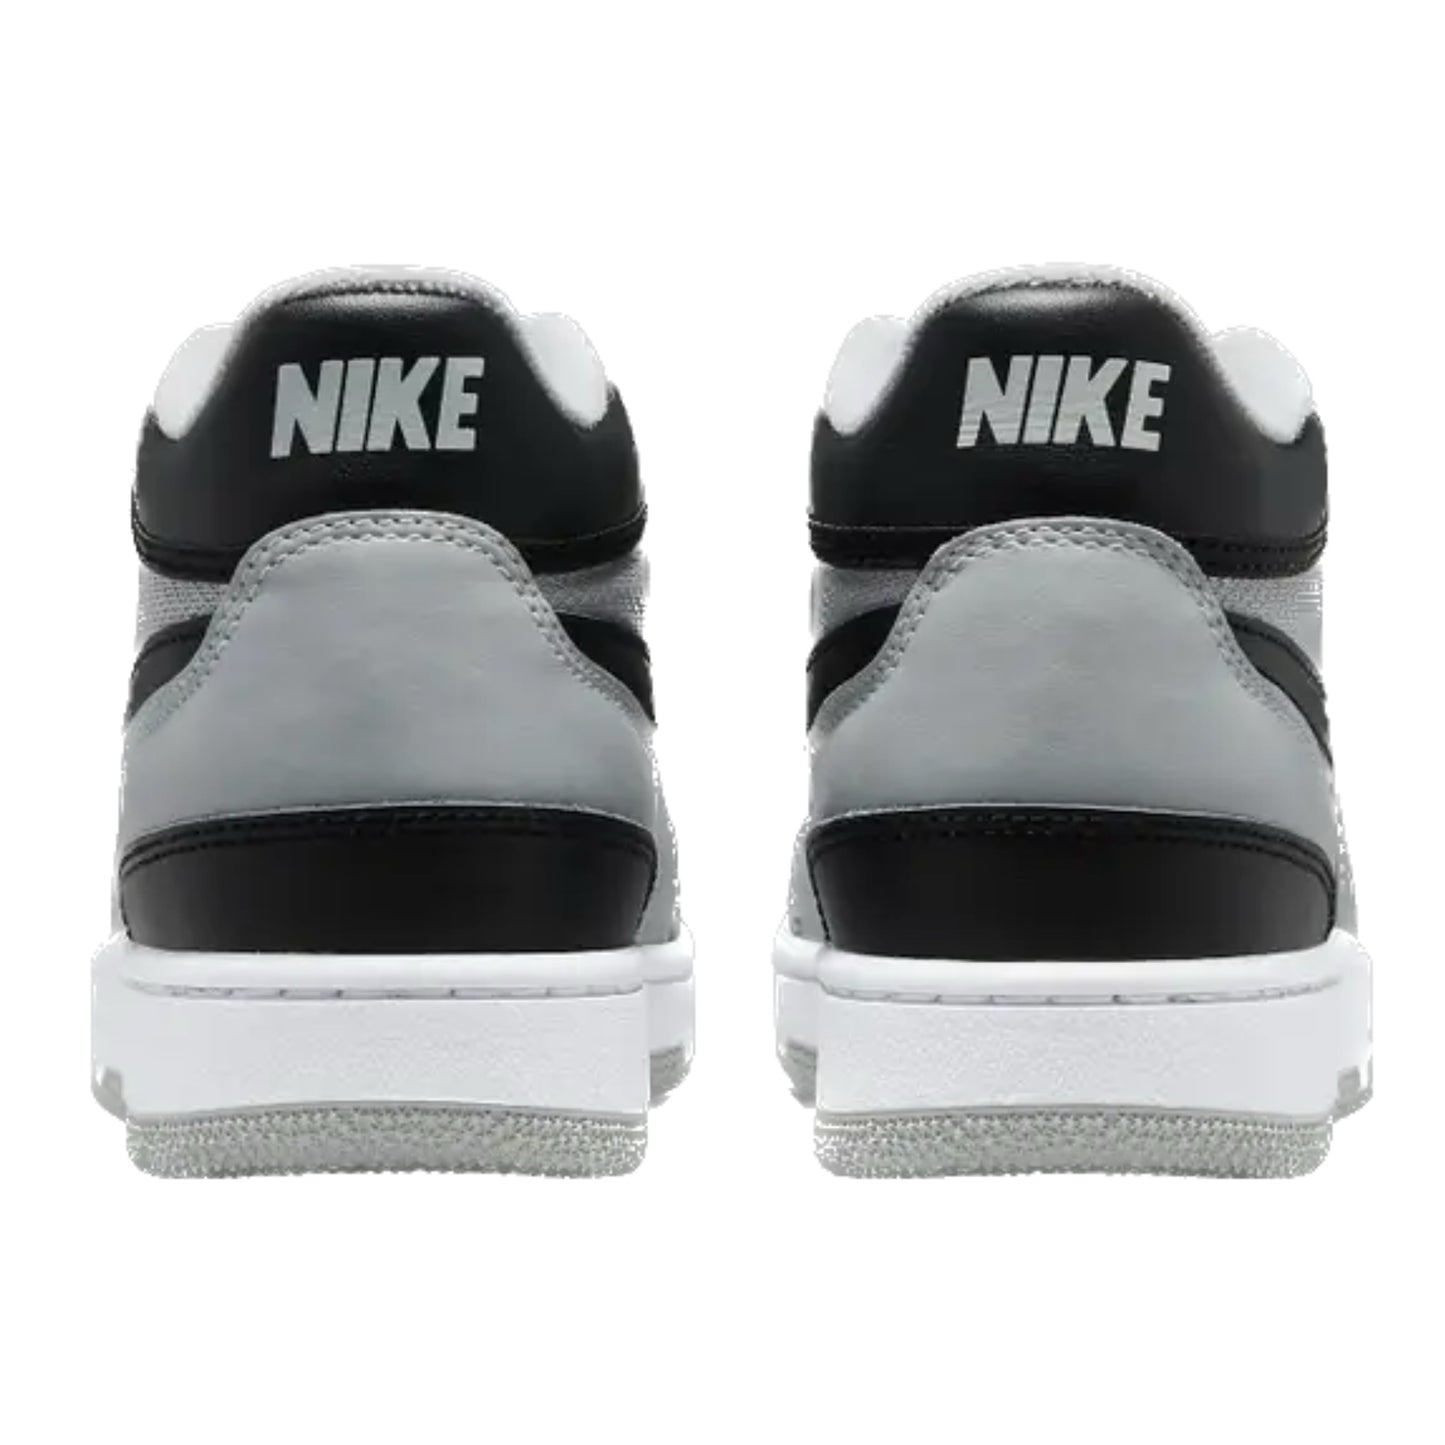 Nike Mac Attack QS SP Light Smoke Grey Black White